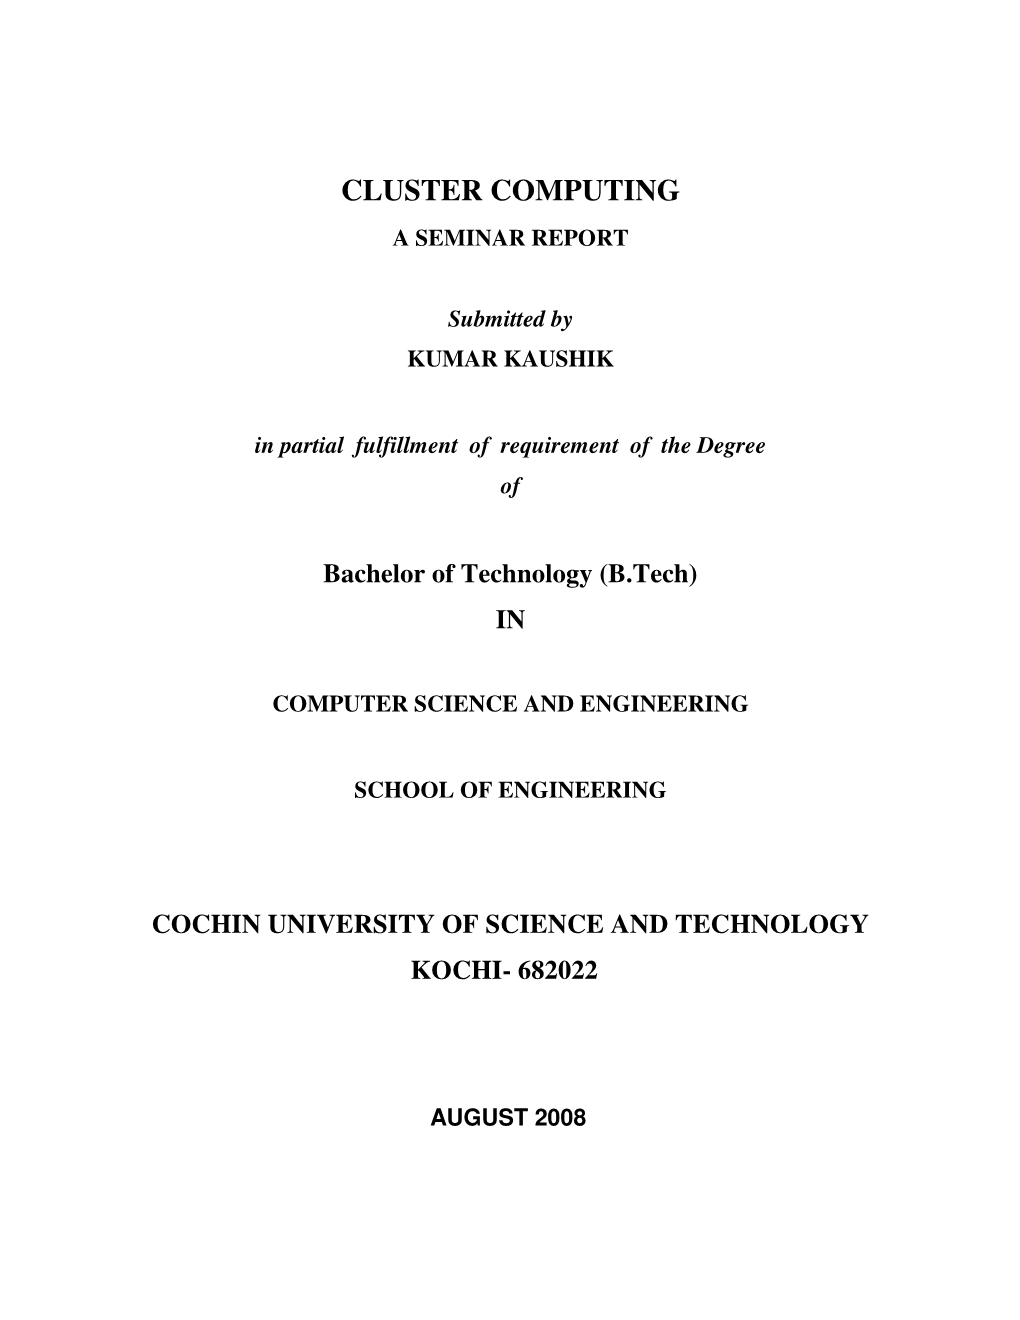 Cluster Computing a Seminar Report